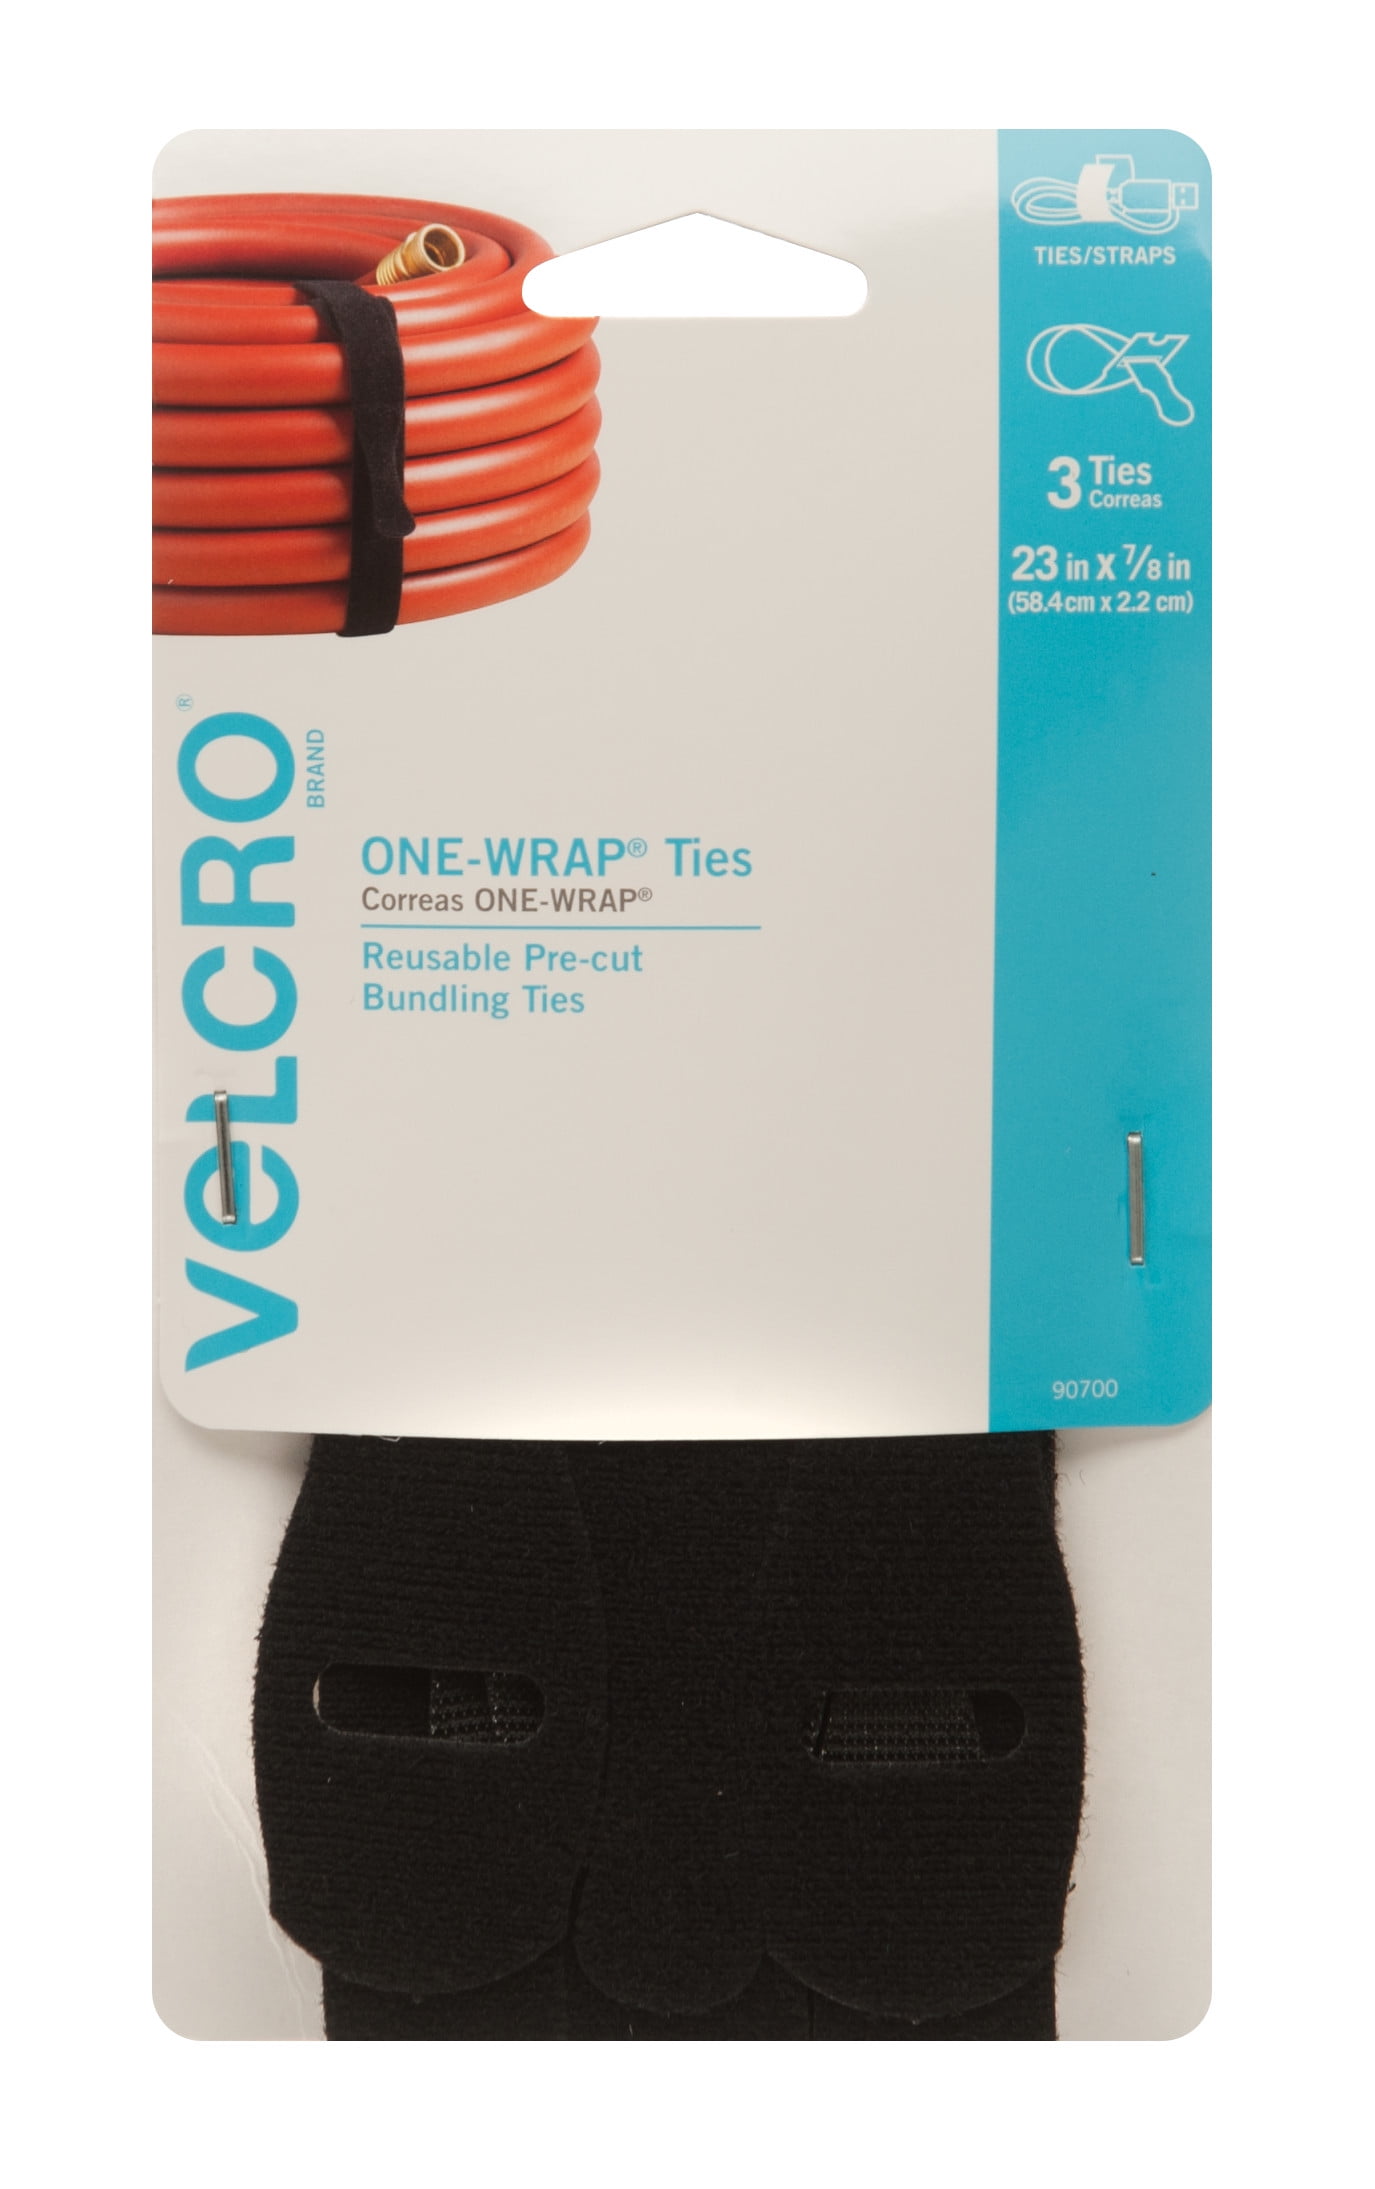 Velcro Extension Strap